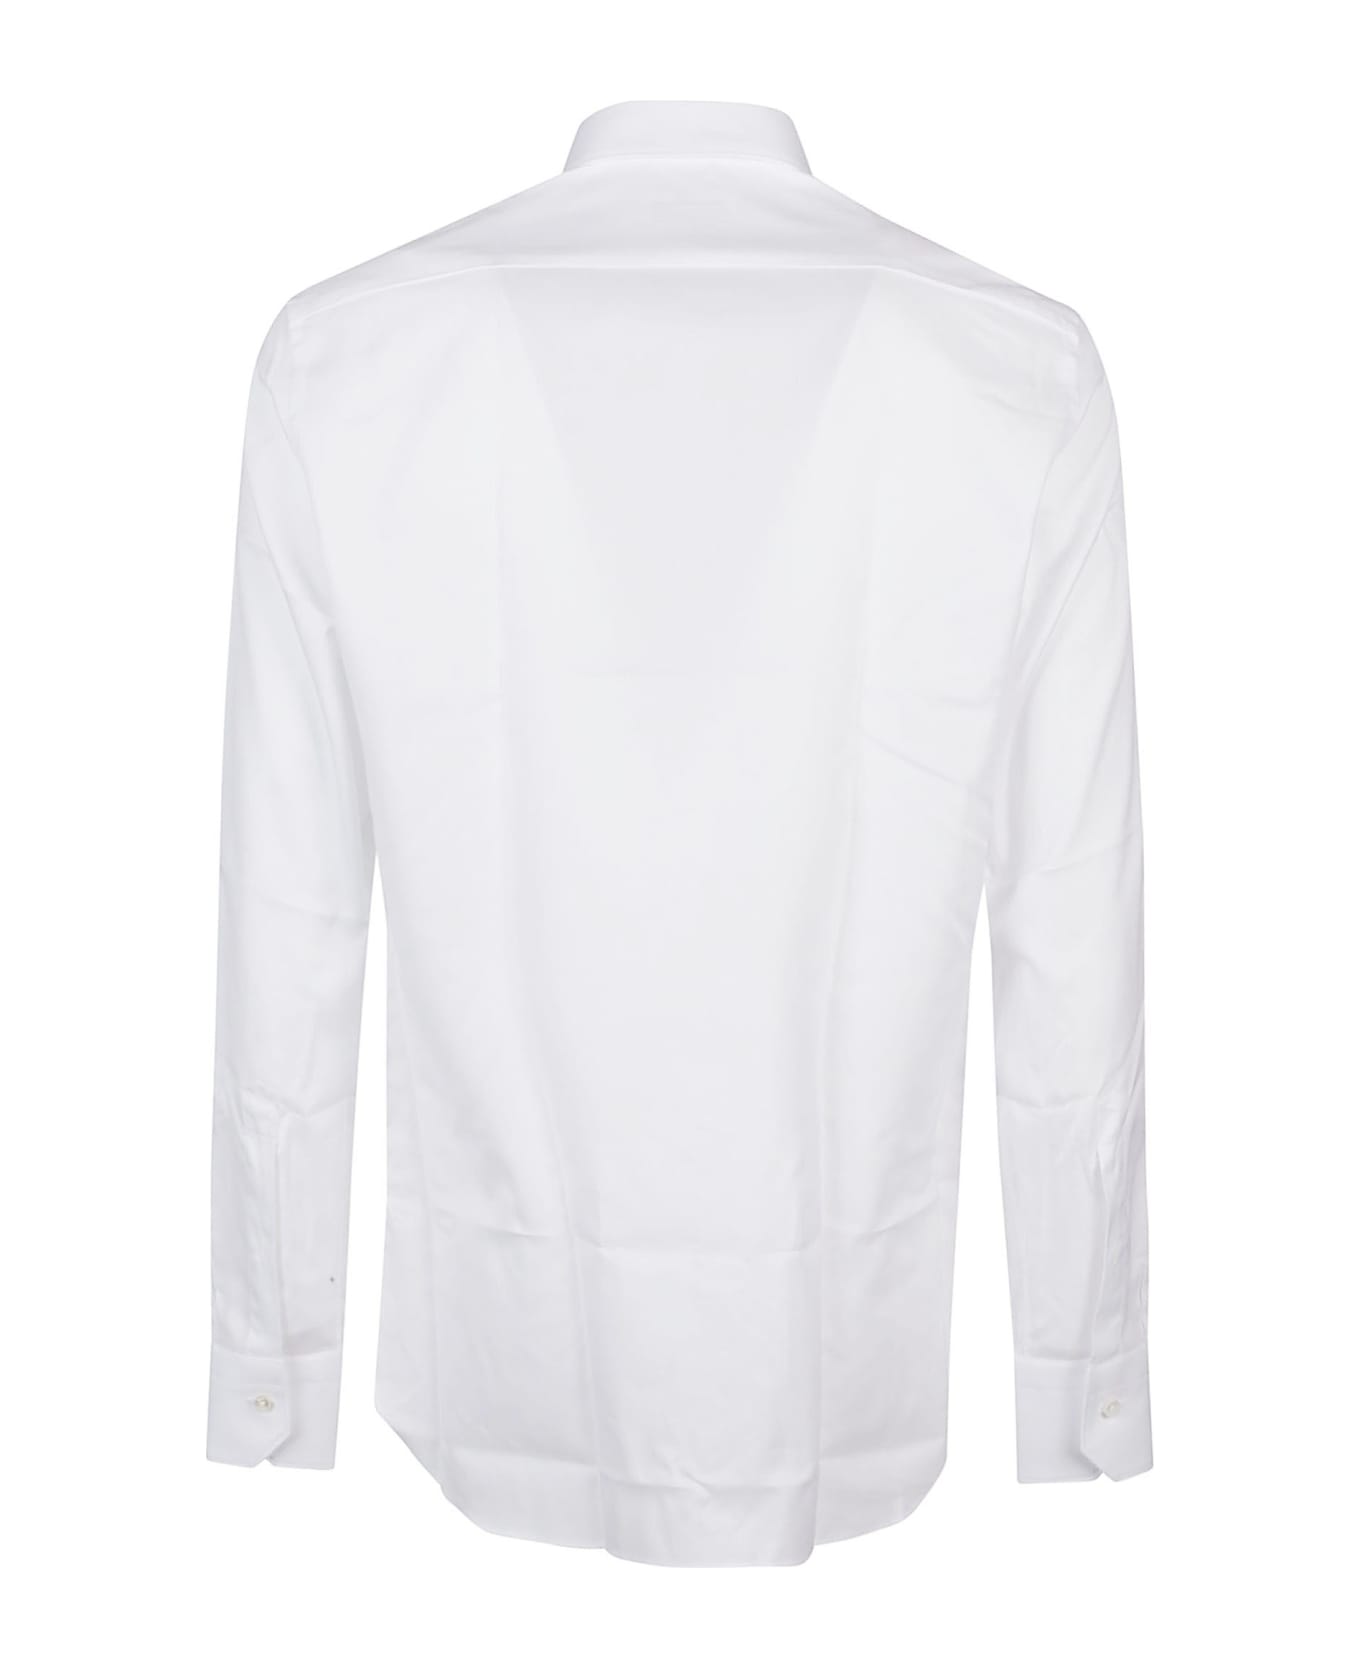 Zegna Long Sleeve Shirt - Bianco